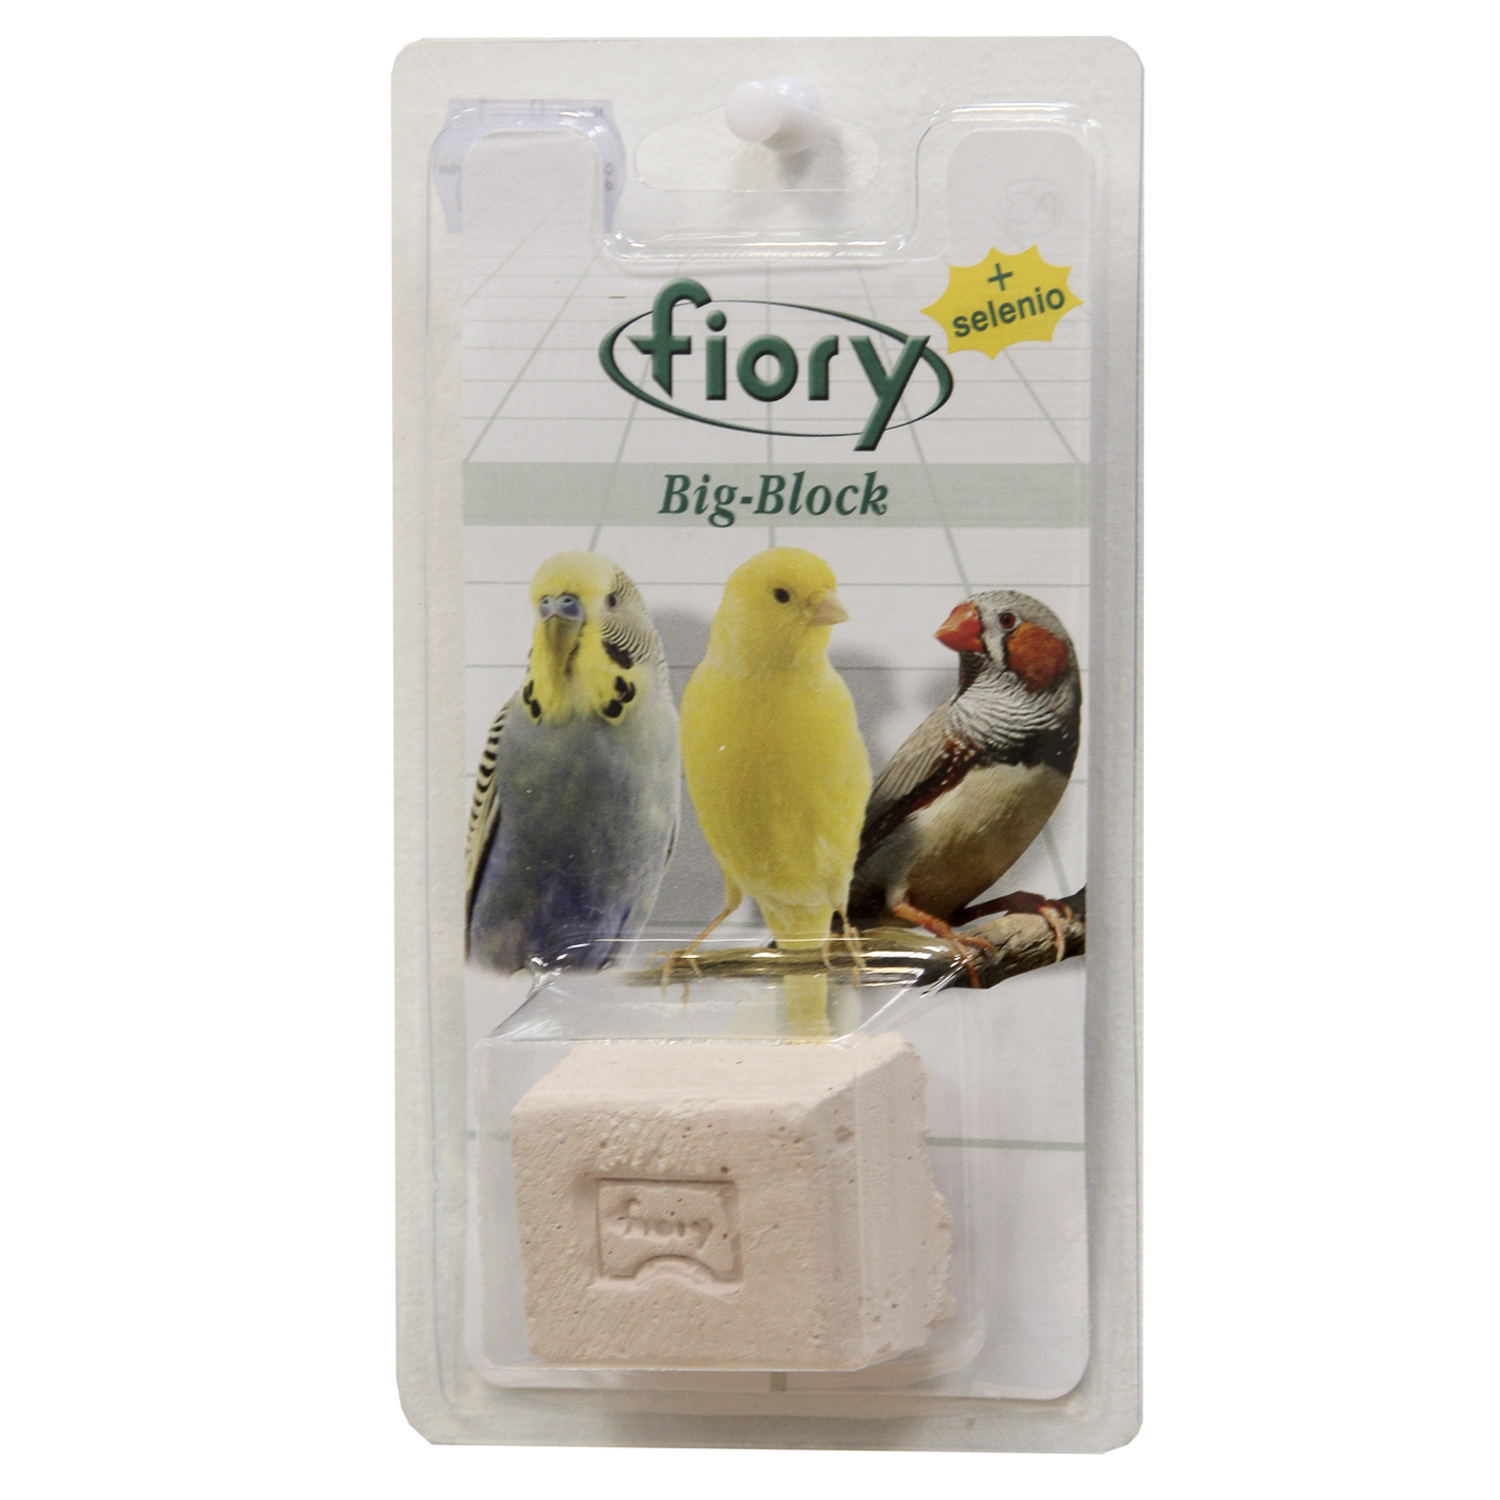 Fiory Fiory био-камень для птиц, с селеном (55 г) био камень для птиц fiory 100г